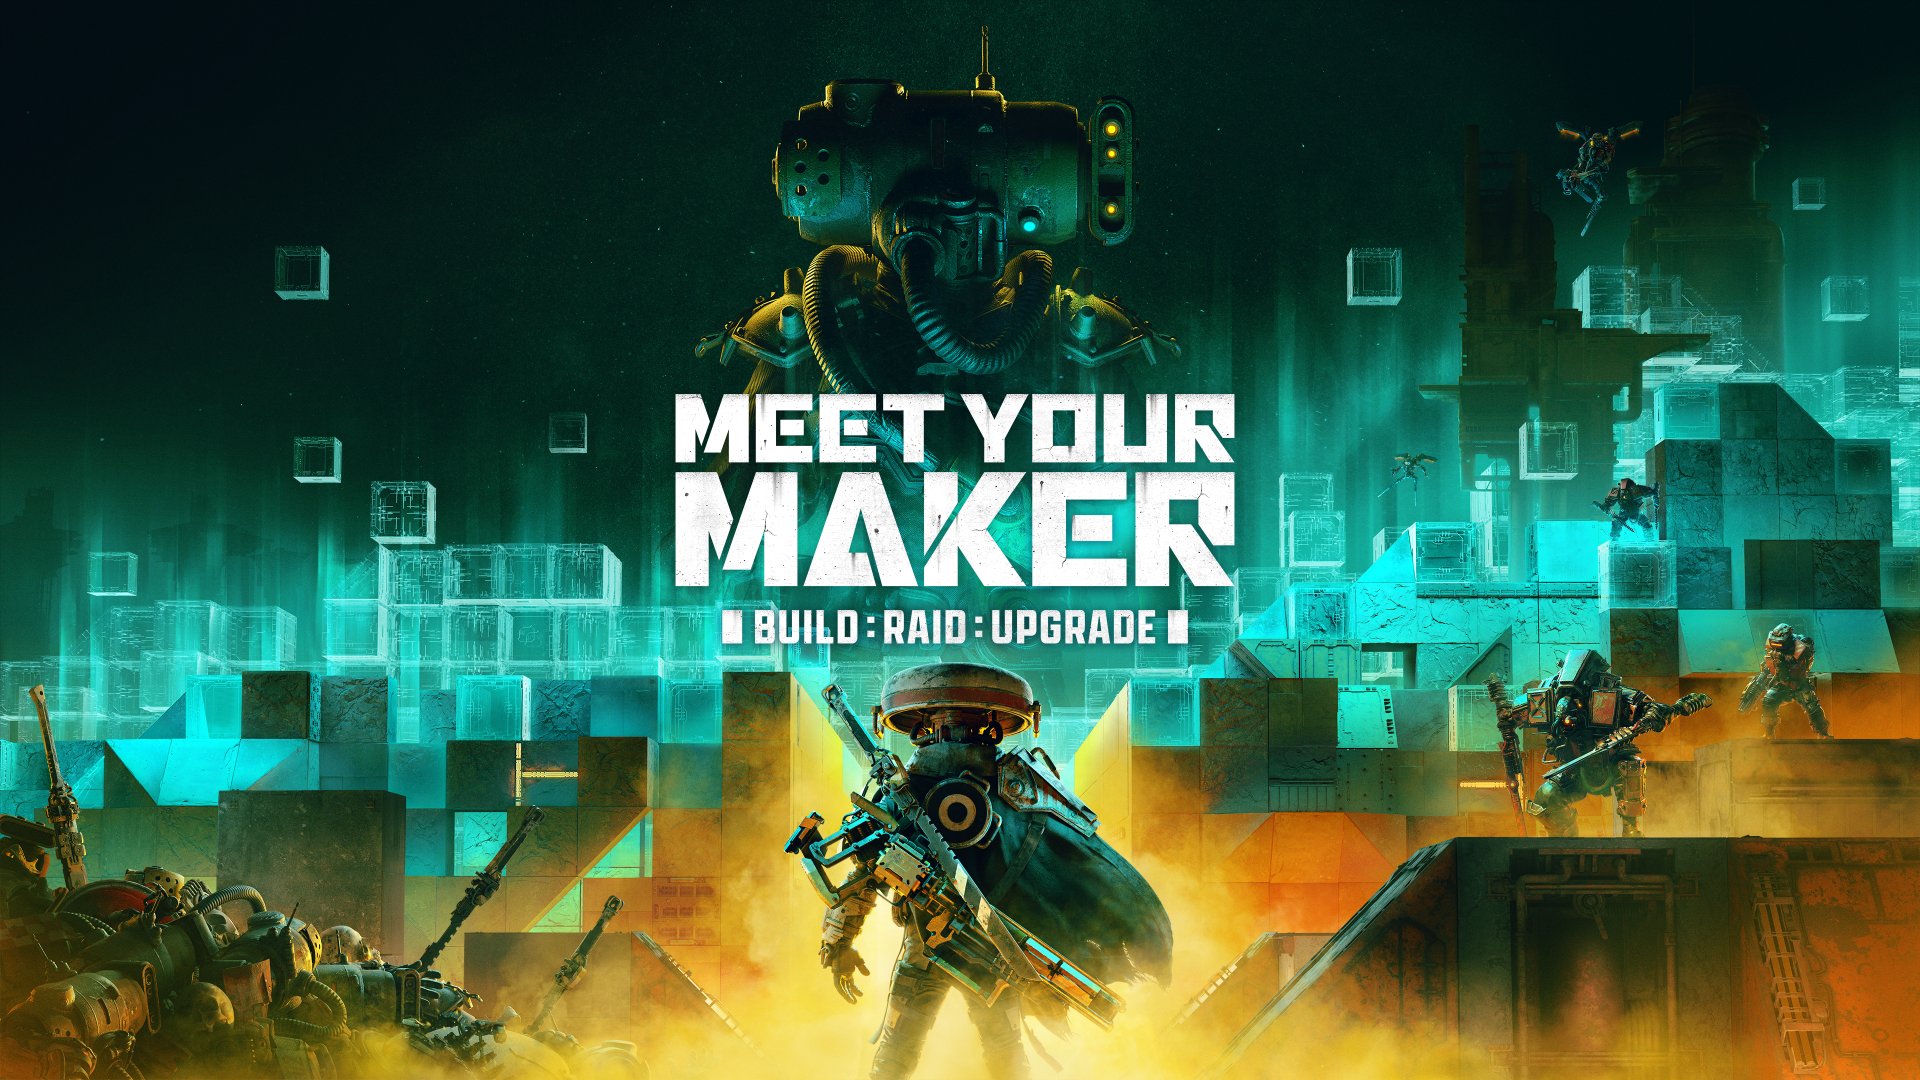 Meet Your Maker will get an open beta in February